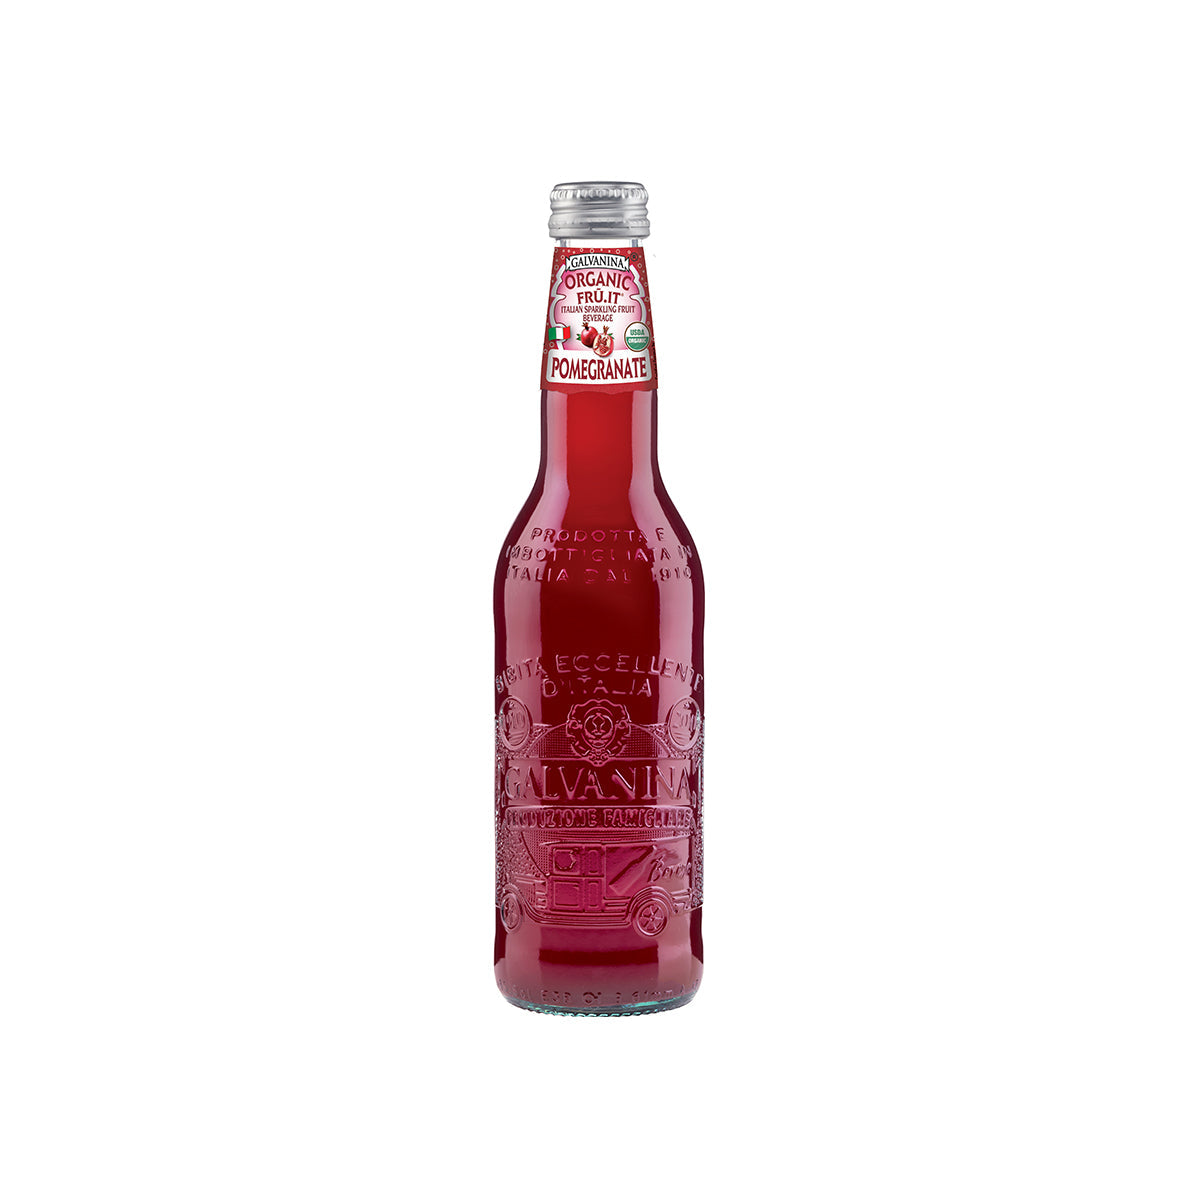 Galvanina Organic Pomegranate Sparkling Soda 12 Oz Bottle